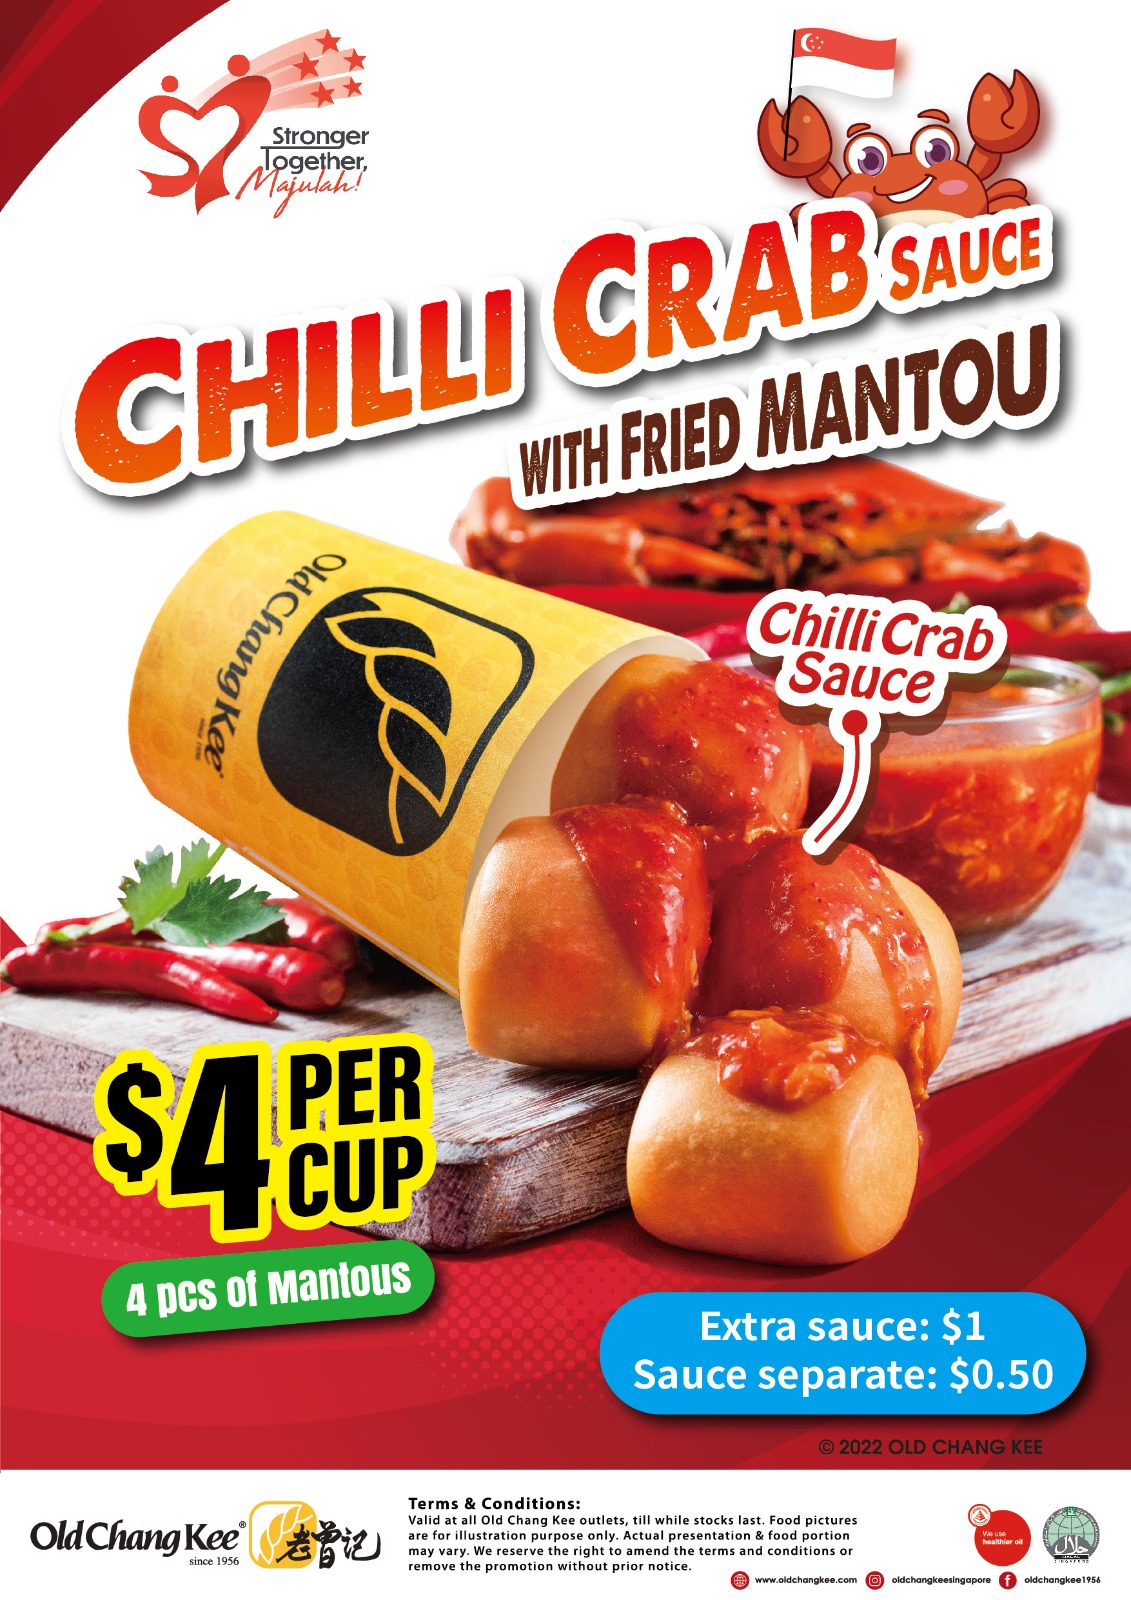 OCK-Chilli-Crab-Sauce-with-Fried-Mantou.jpeg